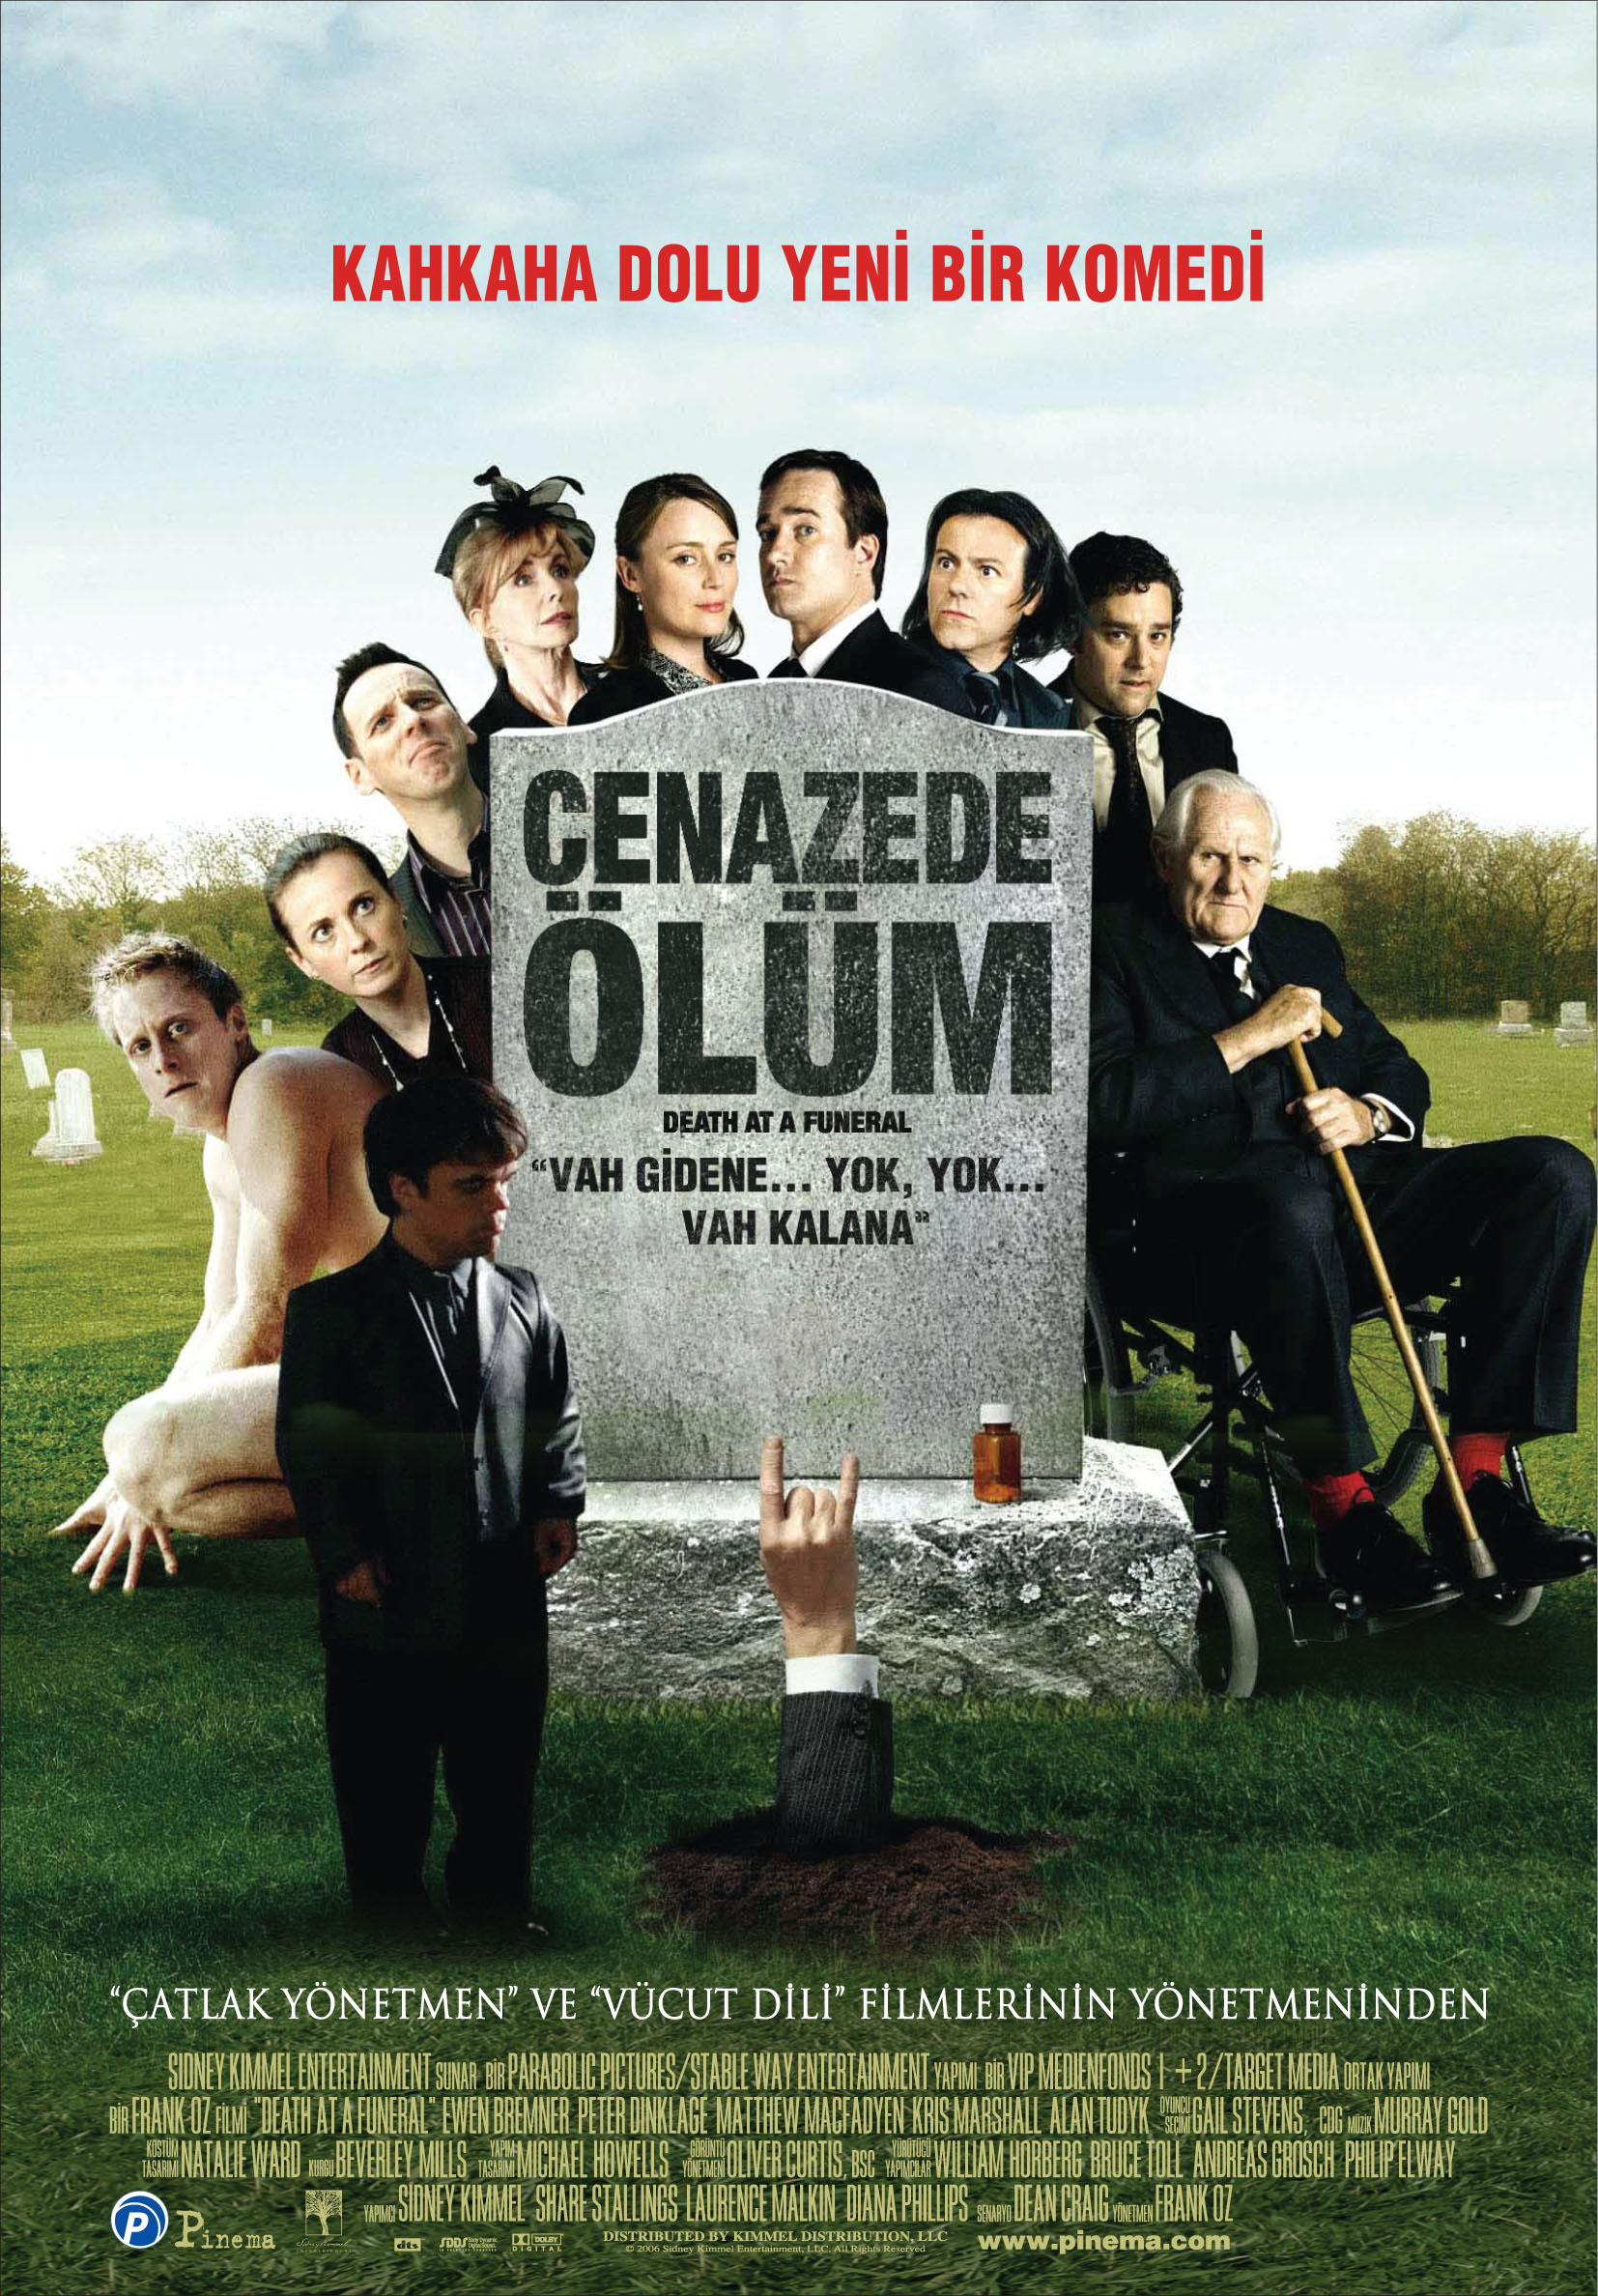 Cenazede Ölüm – Death at a Funeral 2007 Türkçe Dublaj izle